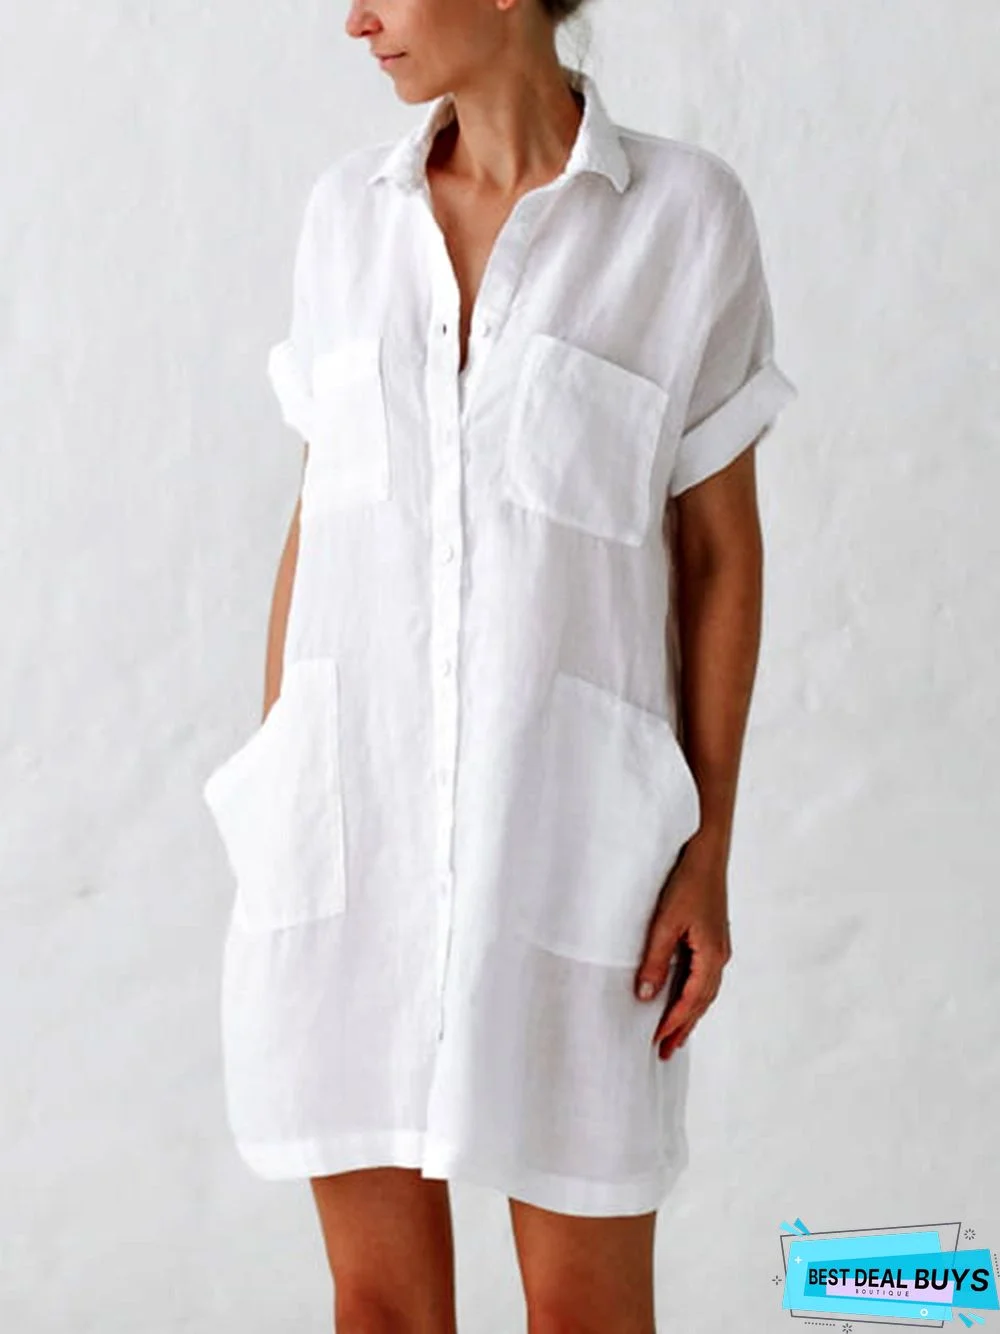 Plus Size Women Solid V Neck Cotton Short Sleeveless Loose Casual Shirt Weaving Dress